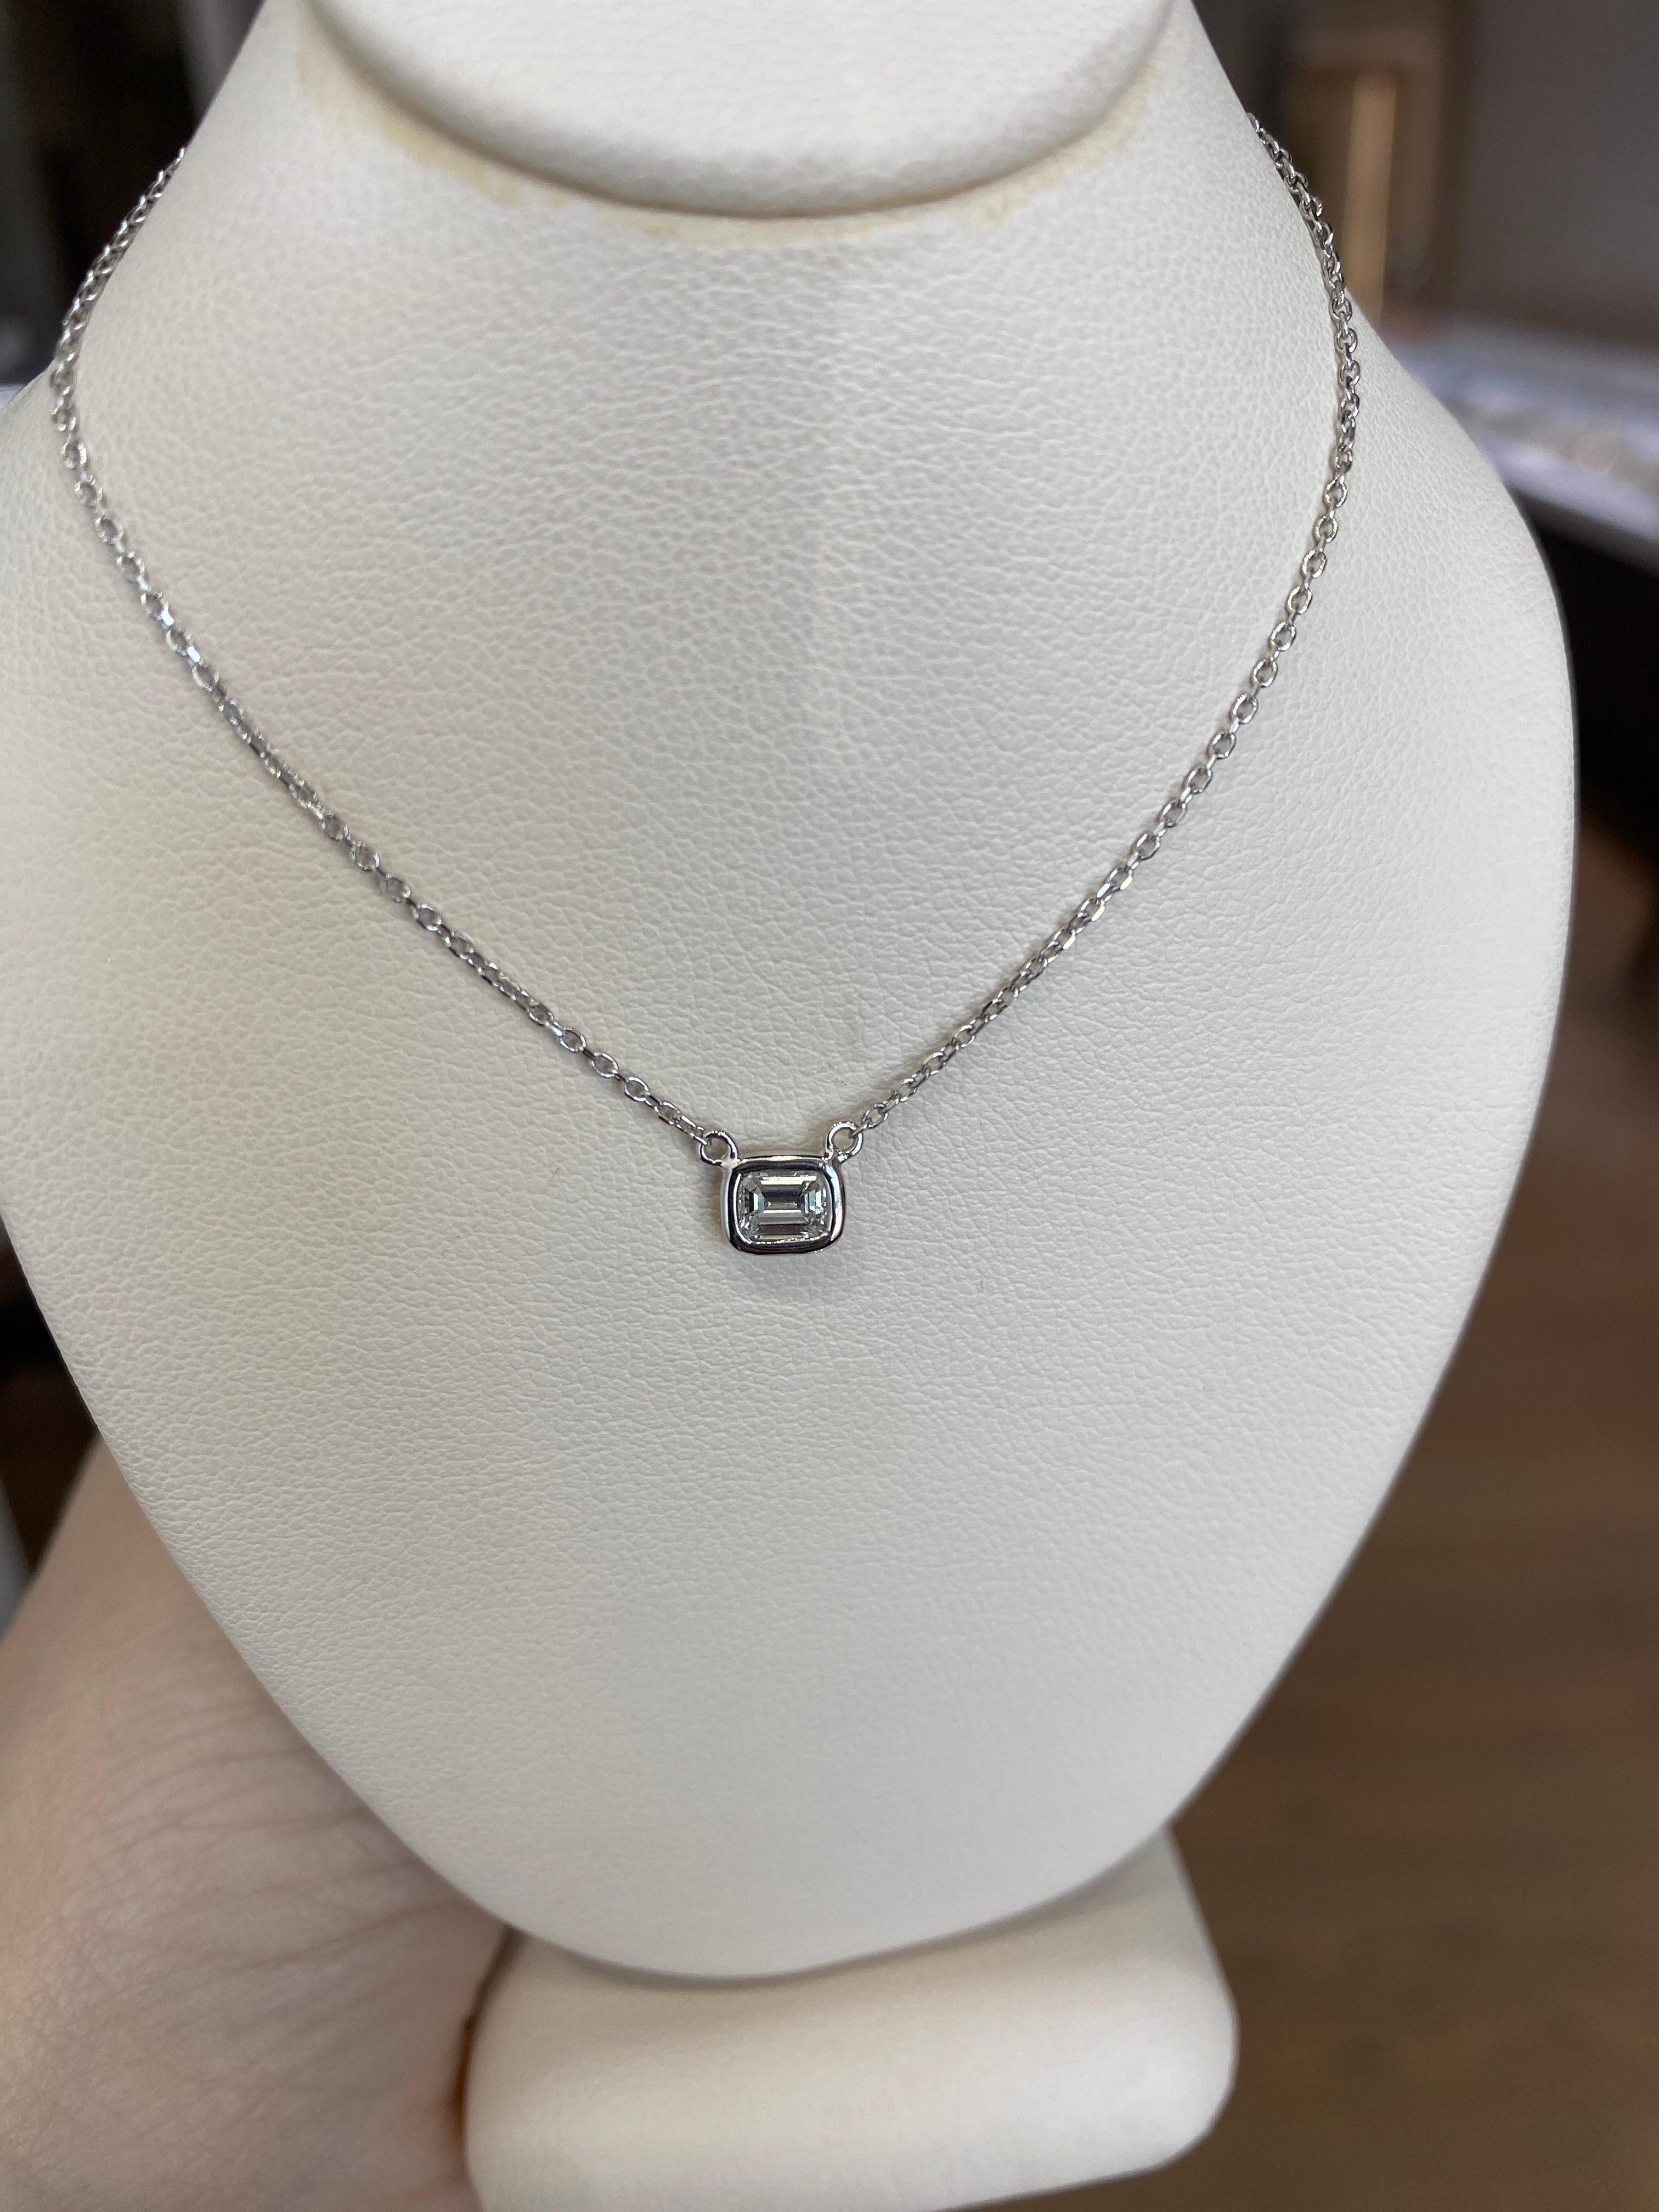 14k White Gold 0.23 Carat Natural Emerald Cut Diamond Pendant Necklace  For Sale 9